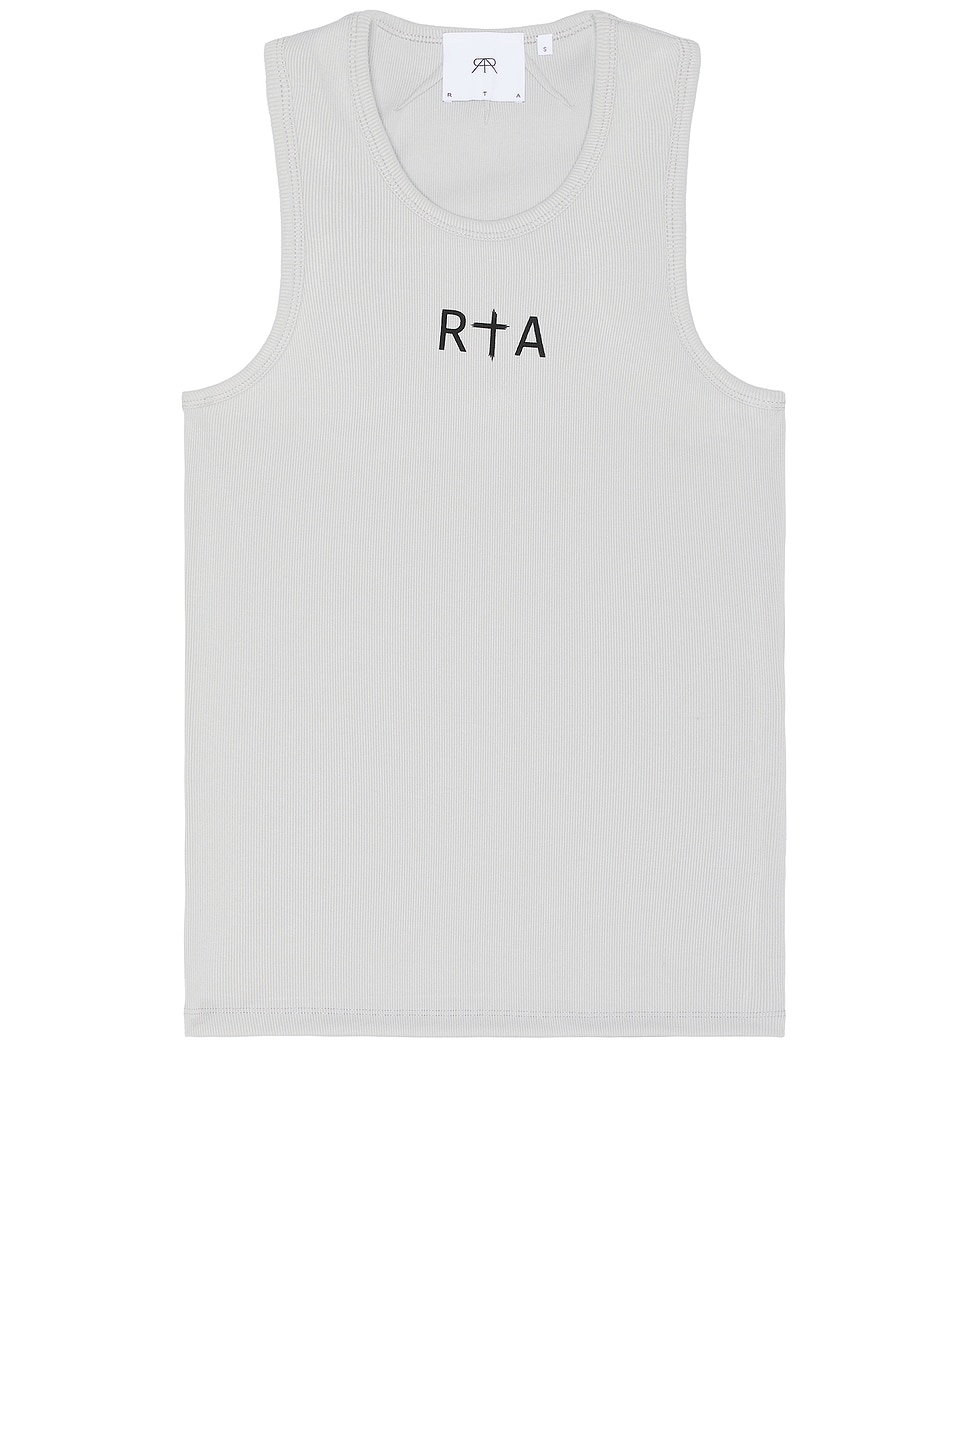 Image 1 of RTA Tank Top in Grey